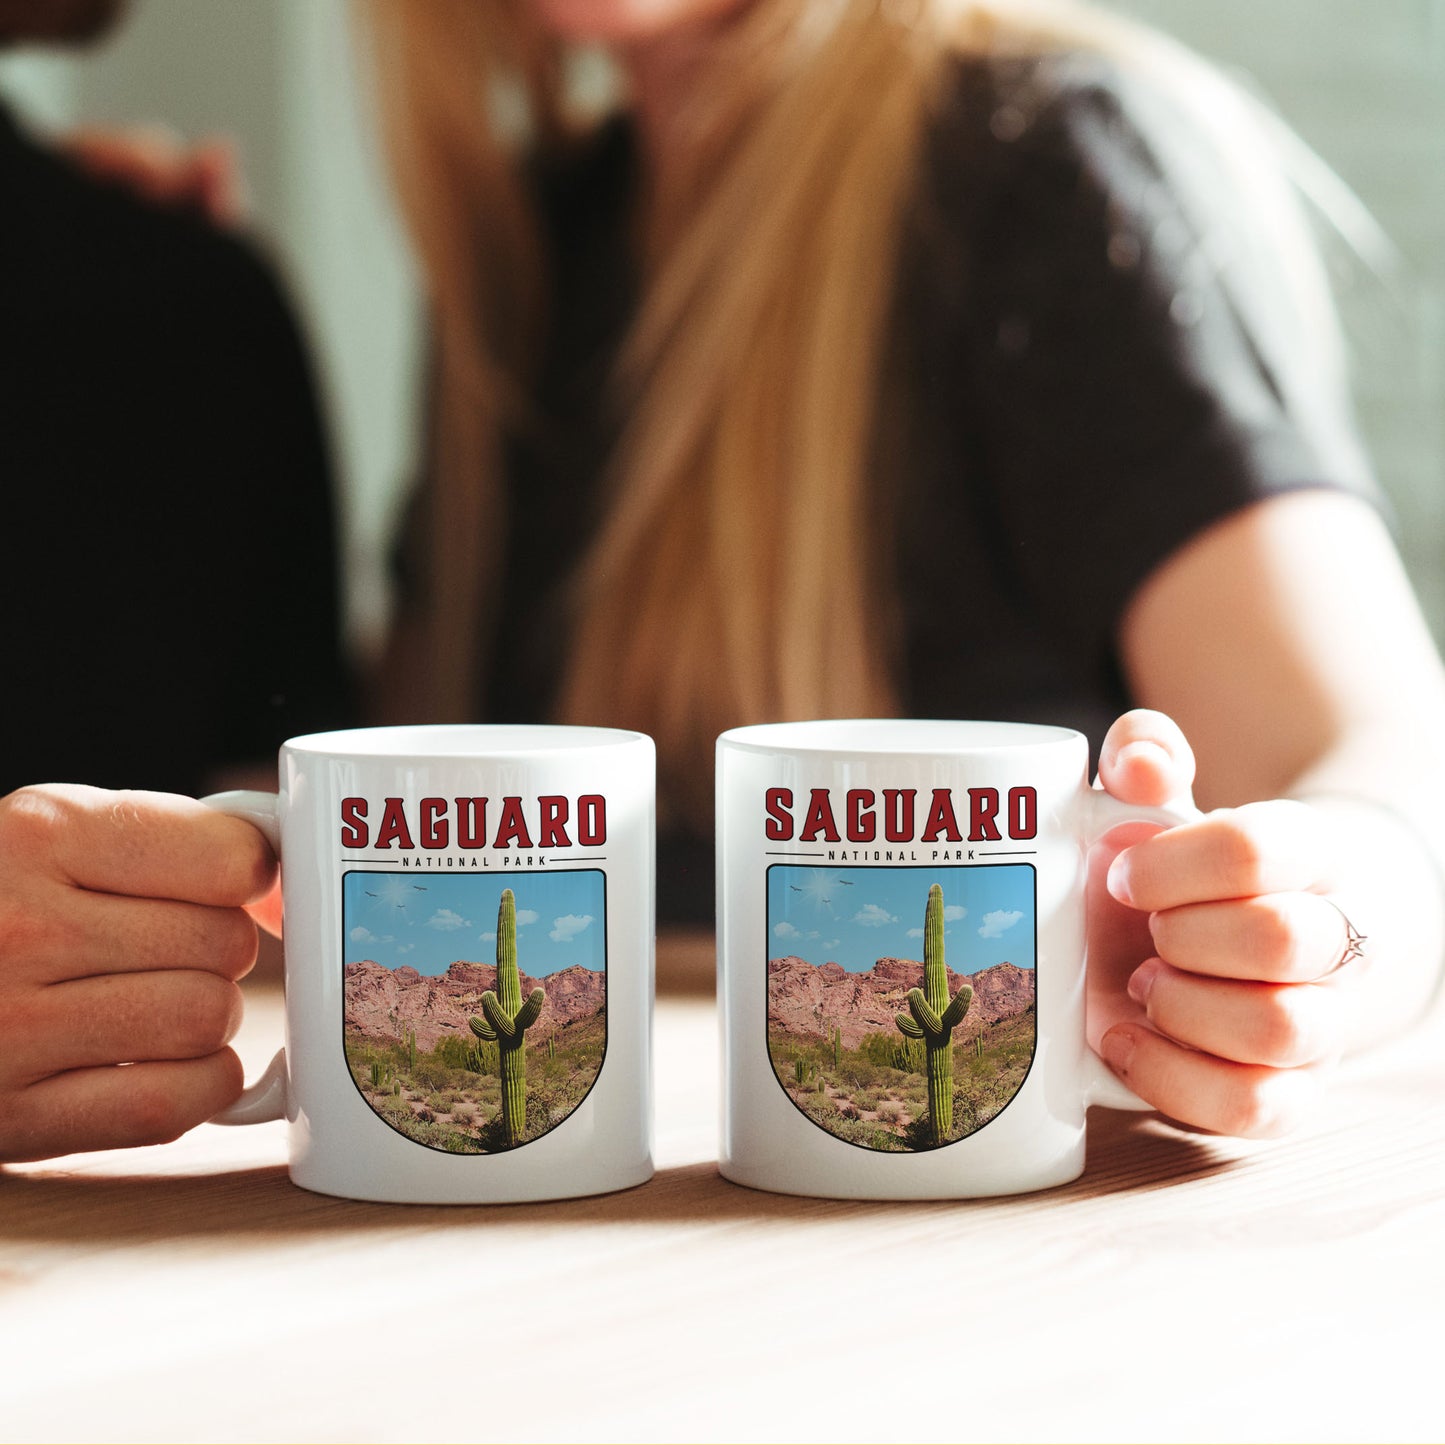 Saguaro National Park - Ceramic Mug